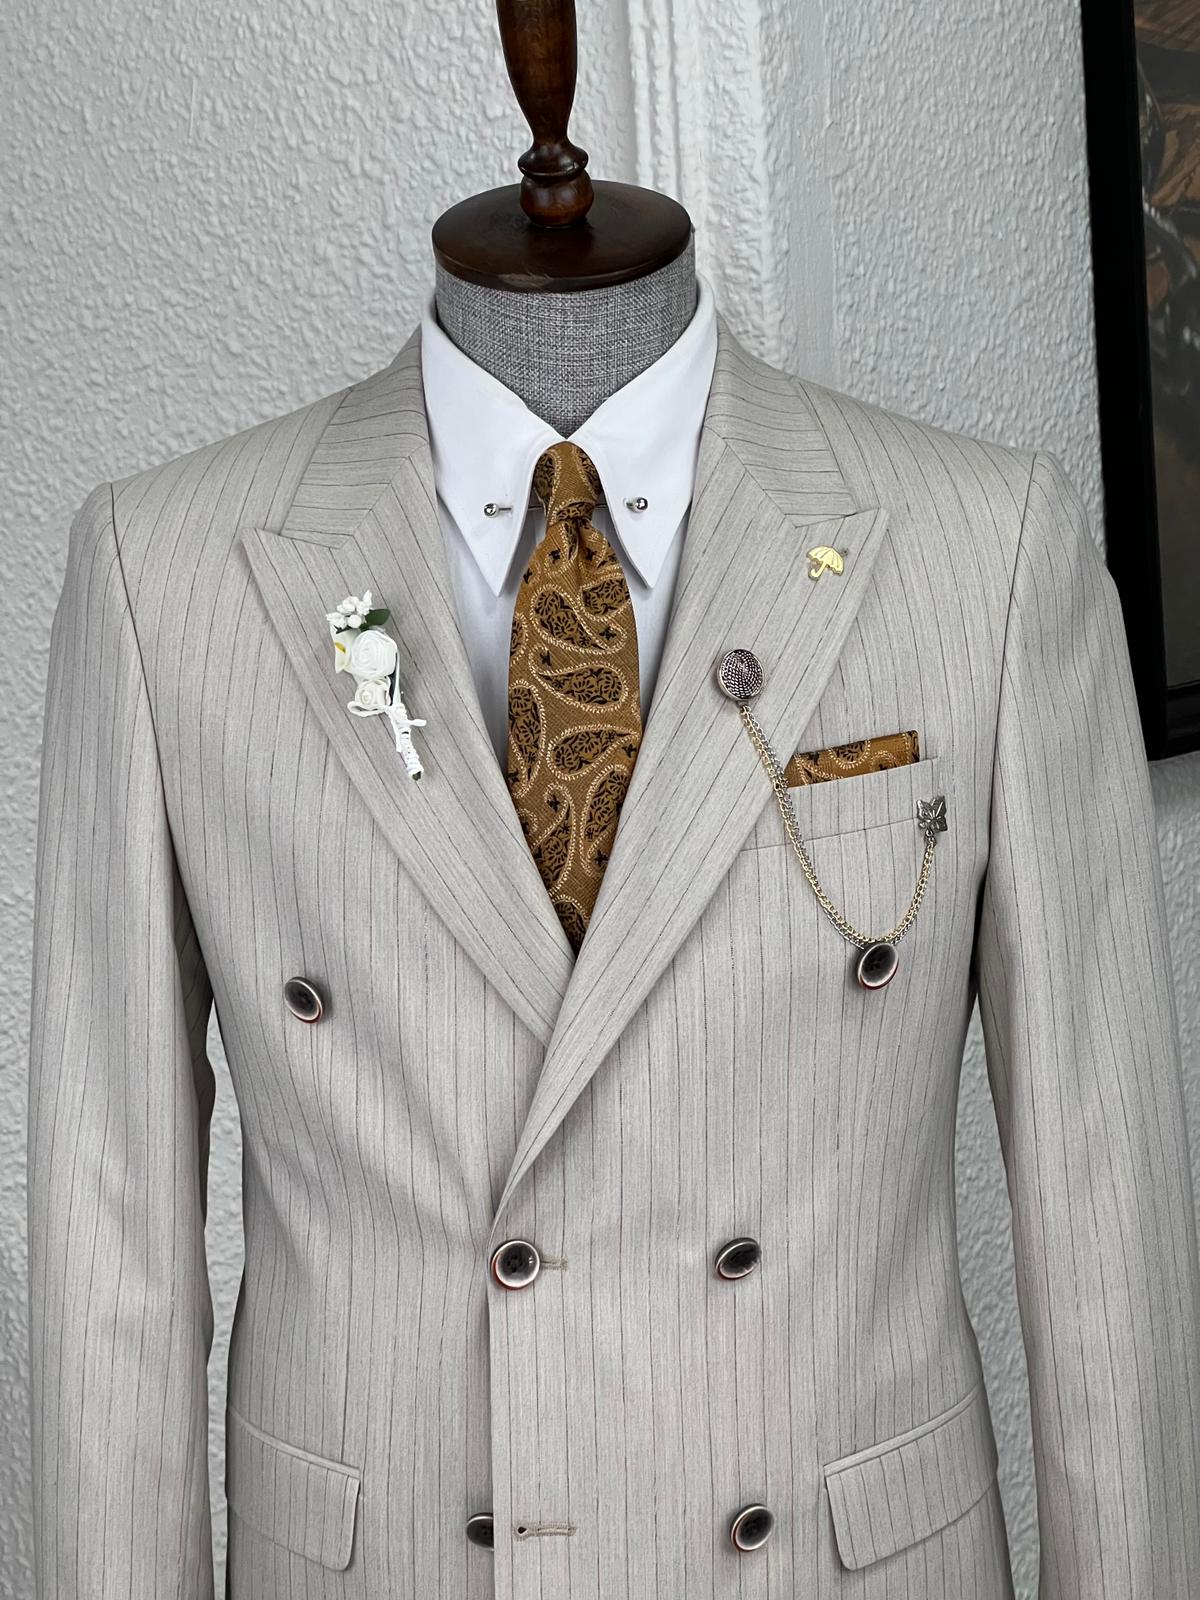 Veneta Slim Fit High Quality Striped Double Breasted Beige Woolen Suit